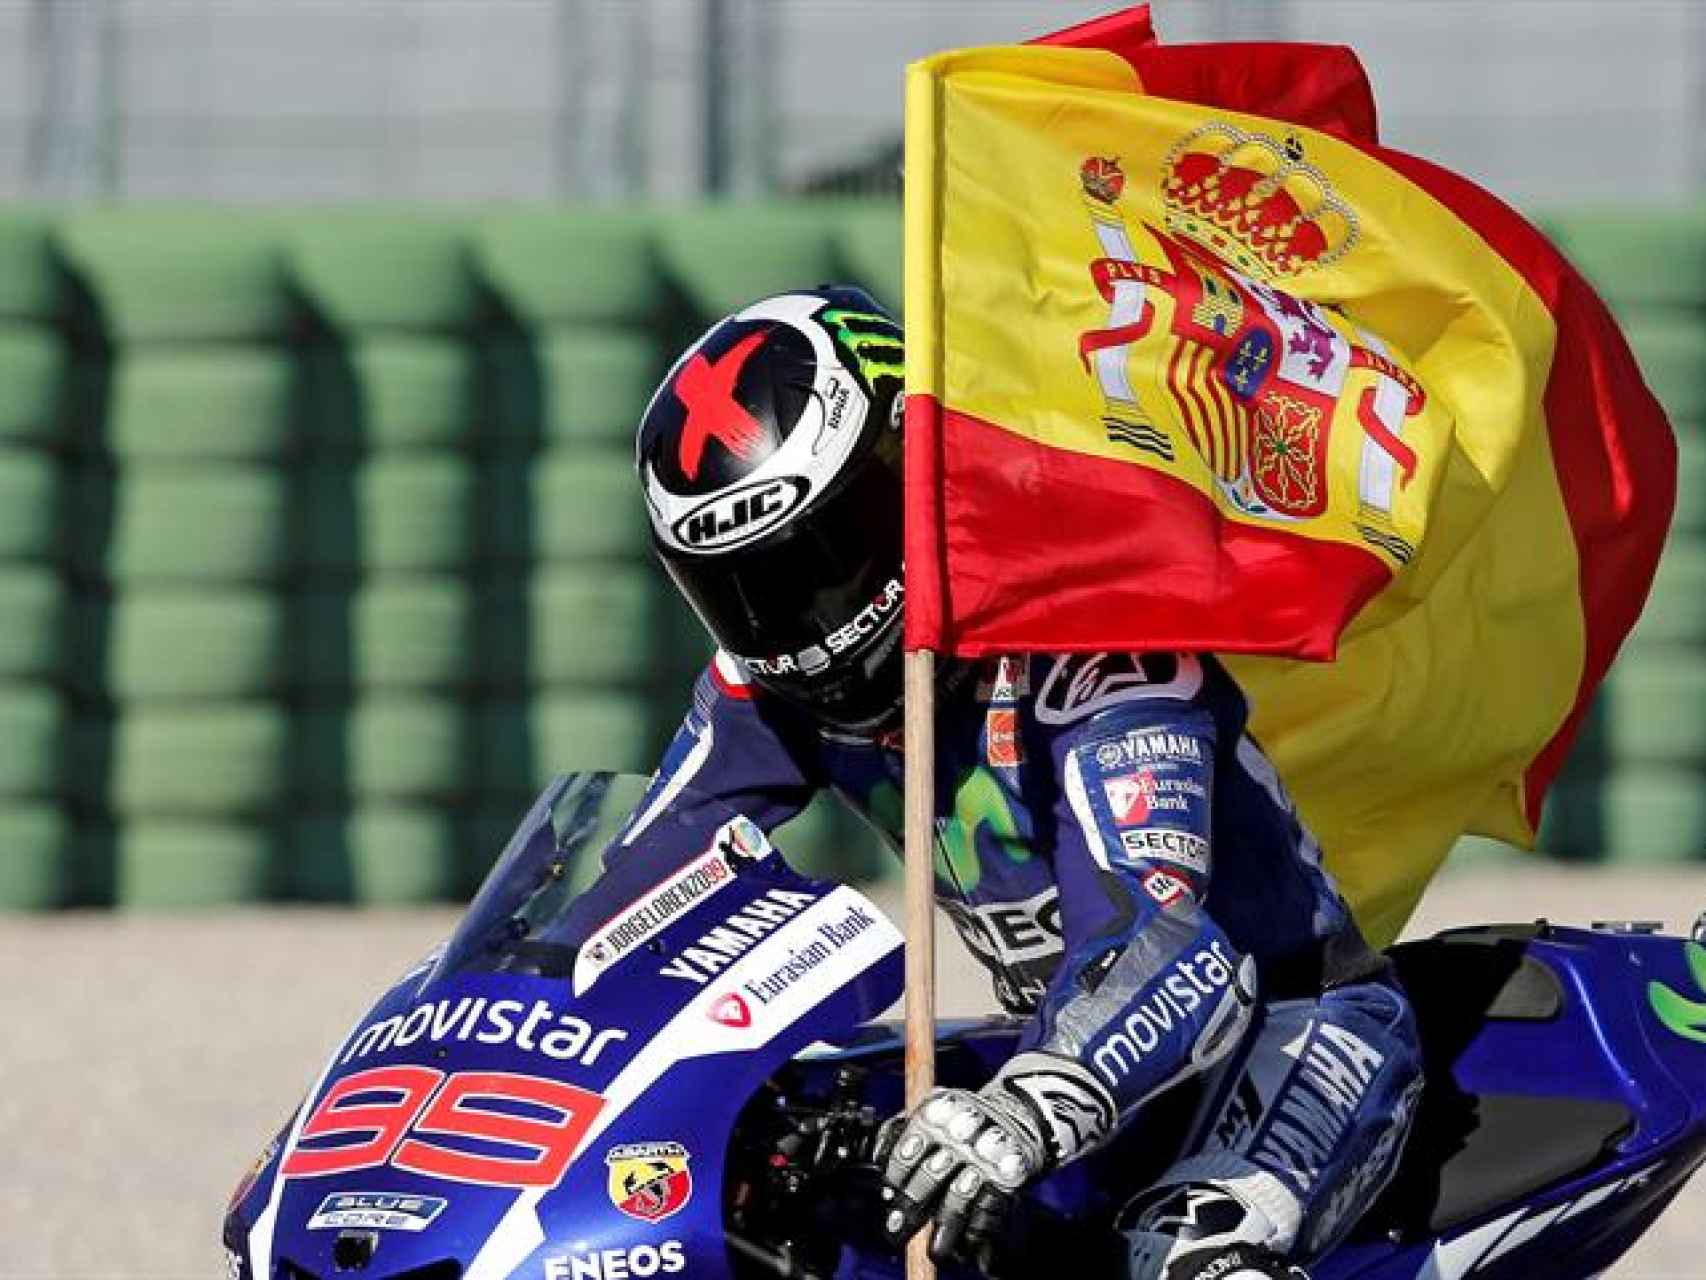 El piloto porta una bandera tras ganar la carrera.